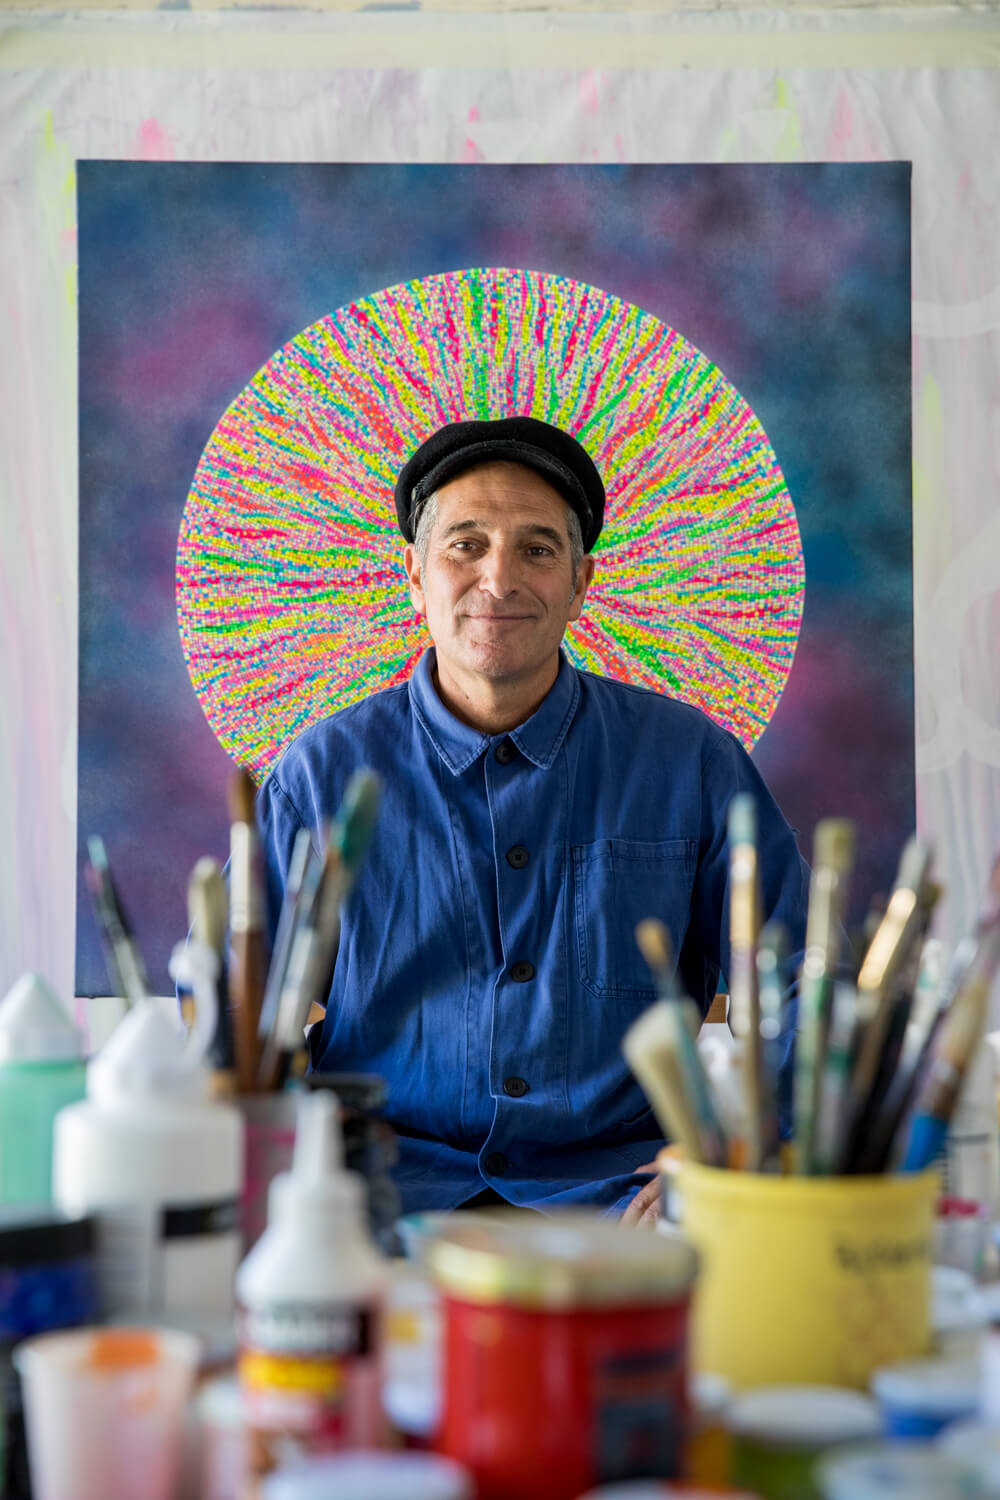 Federico Sanchez portrait in his studio